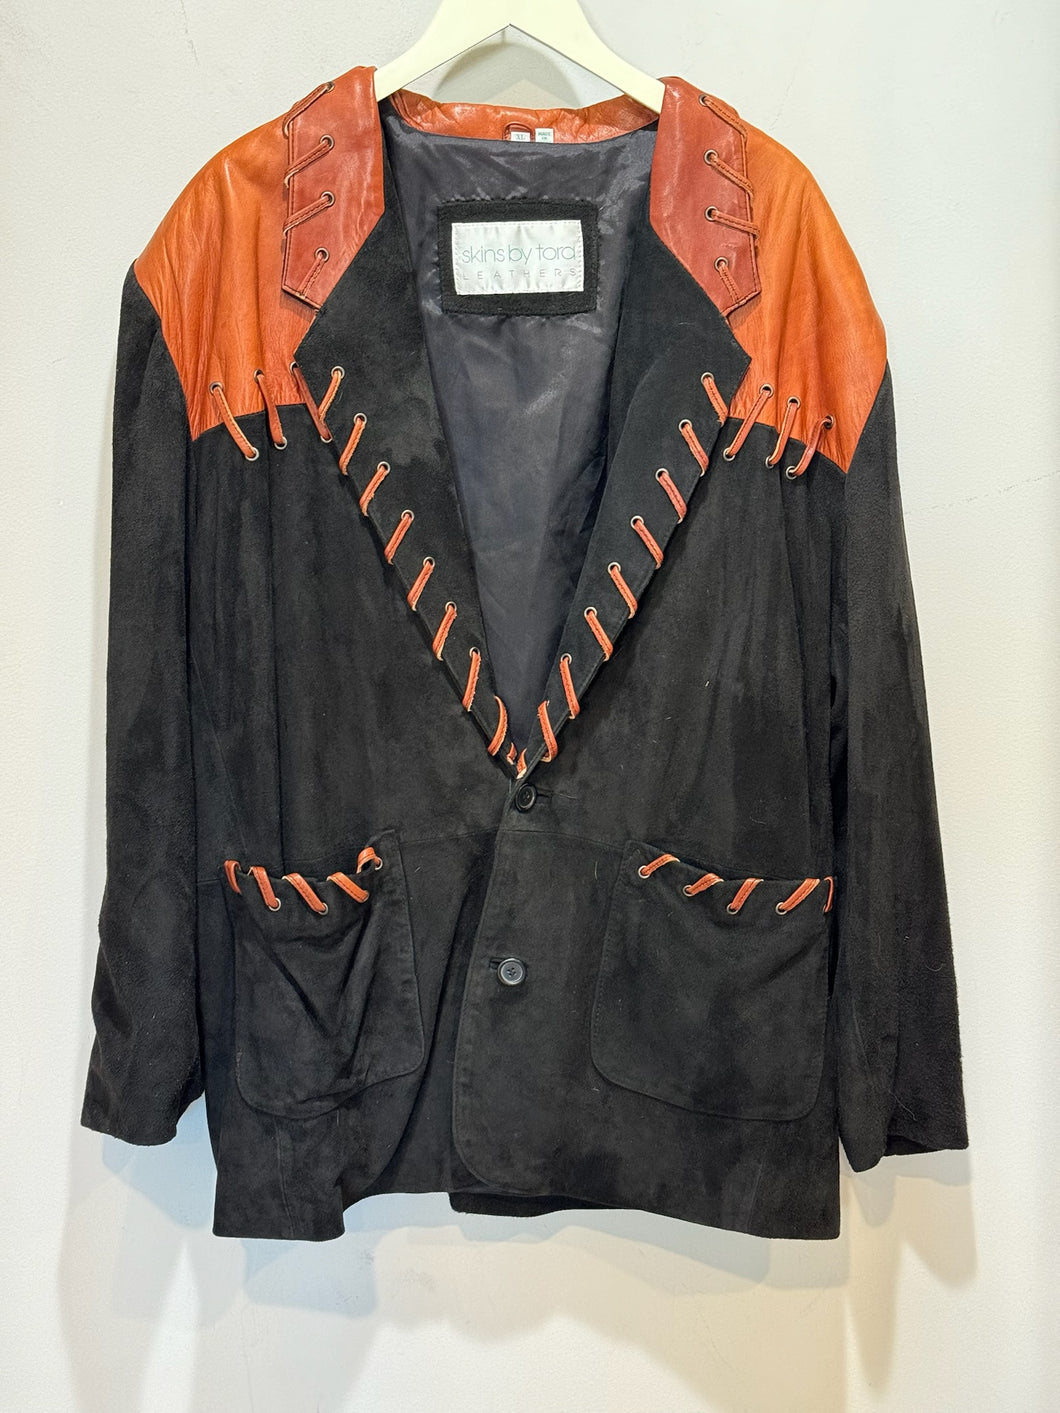 Vintage Skins By Tora Suede Leather Jacket